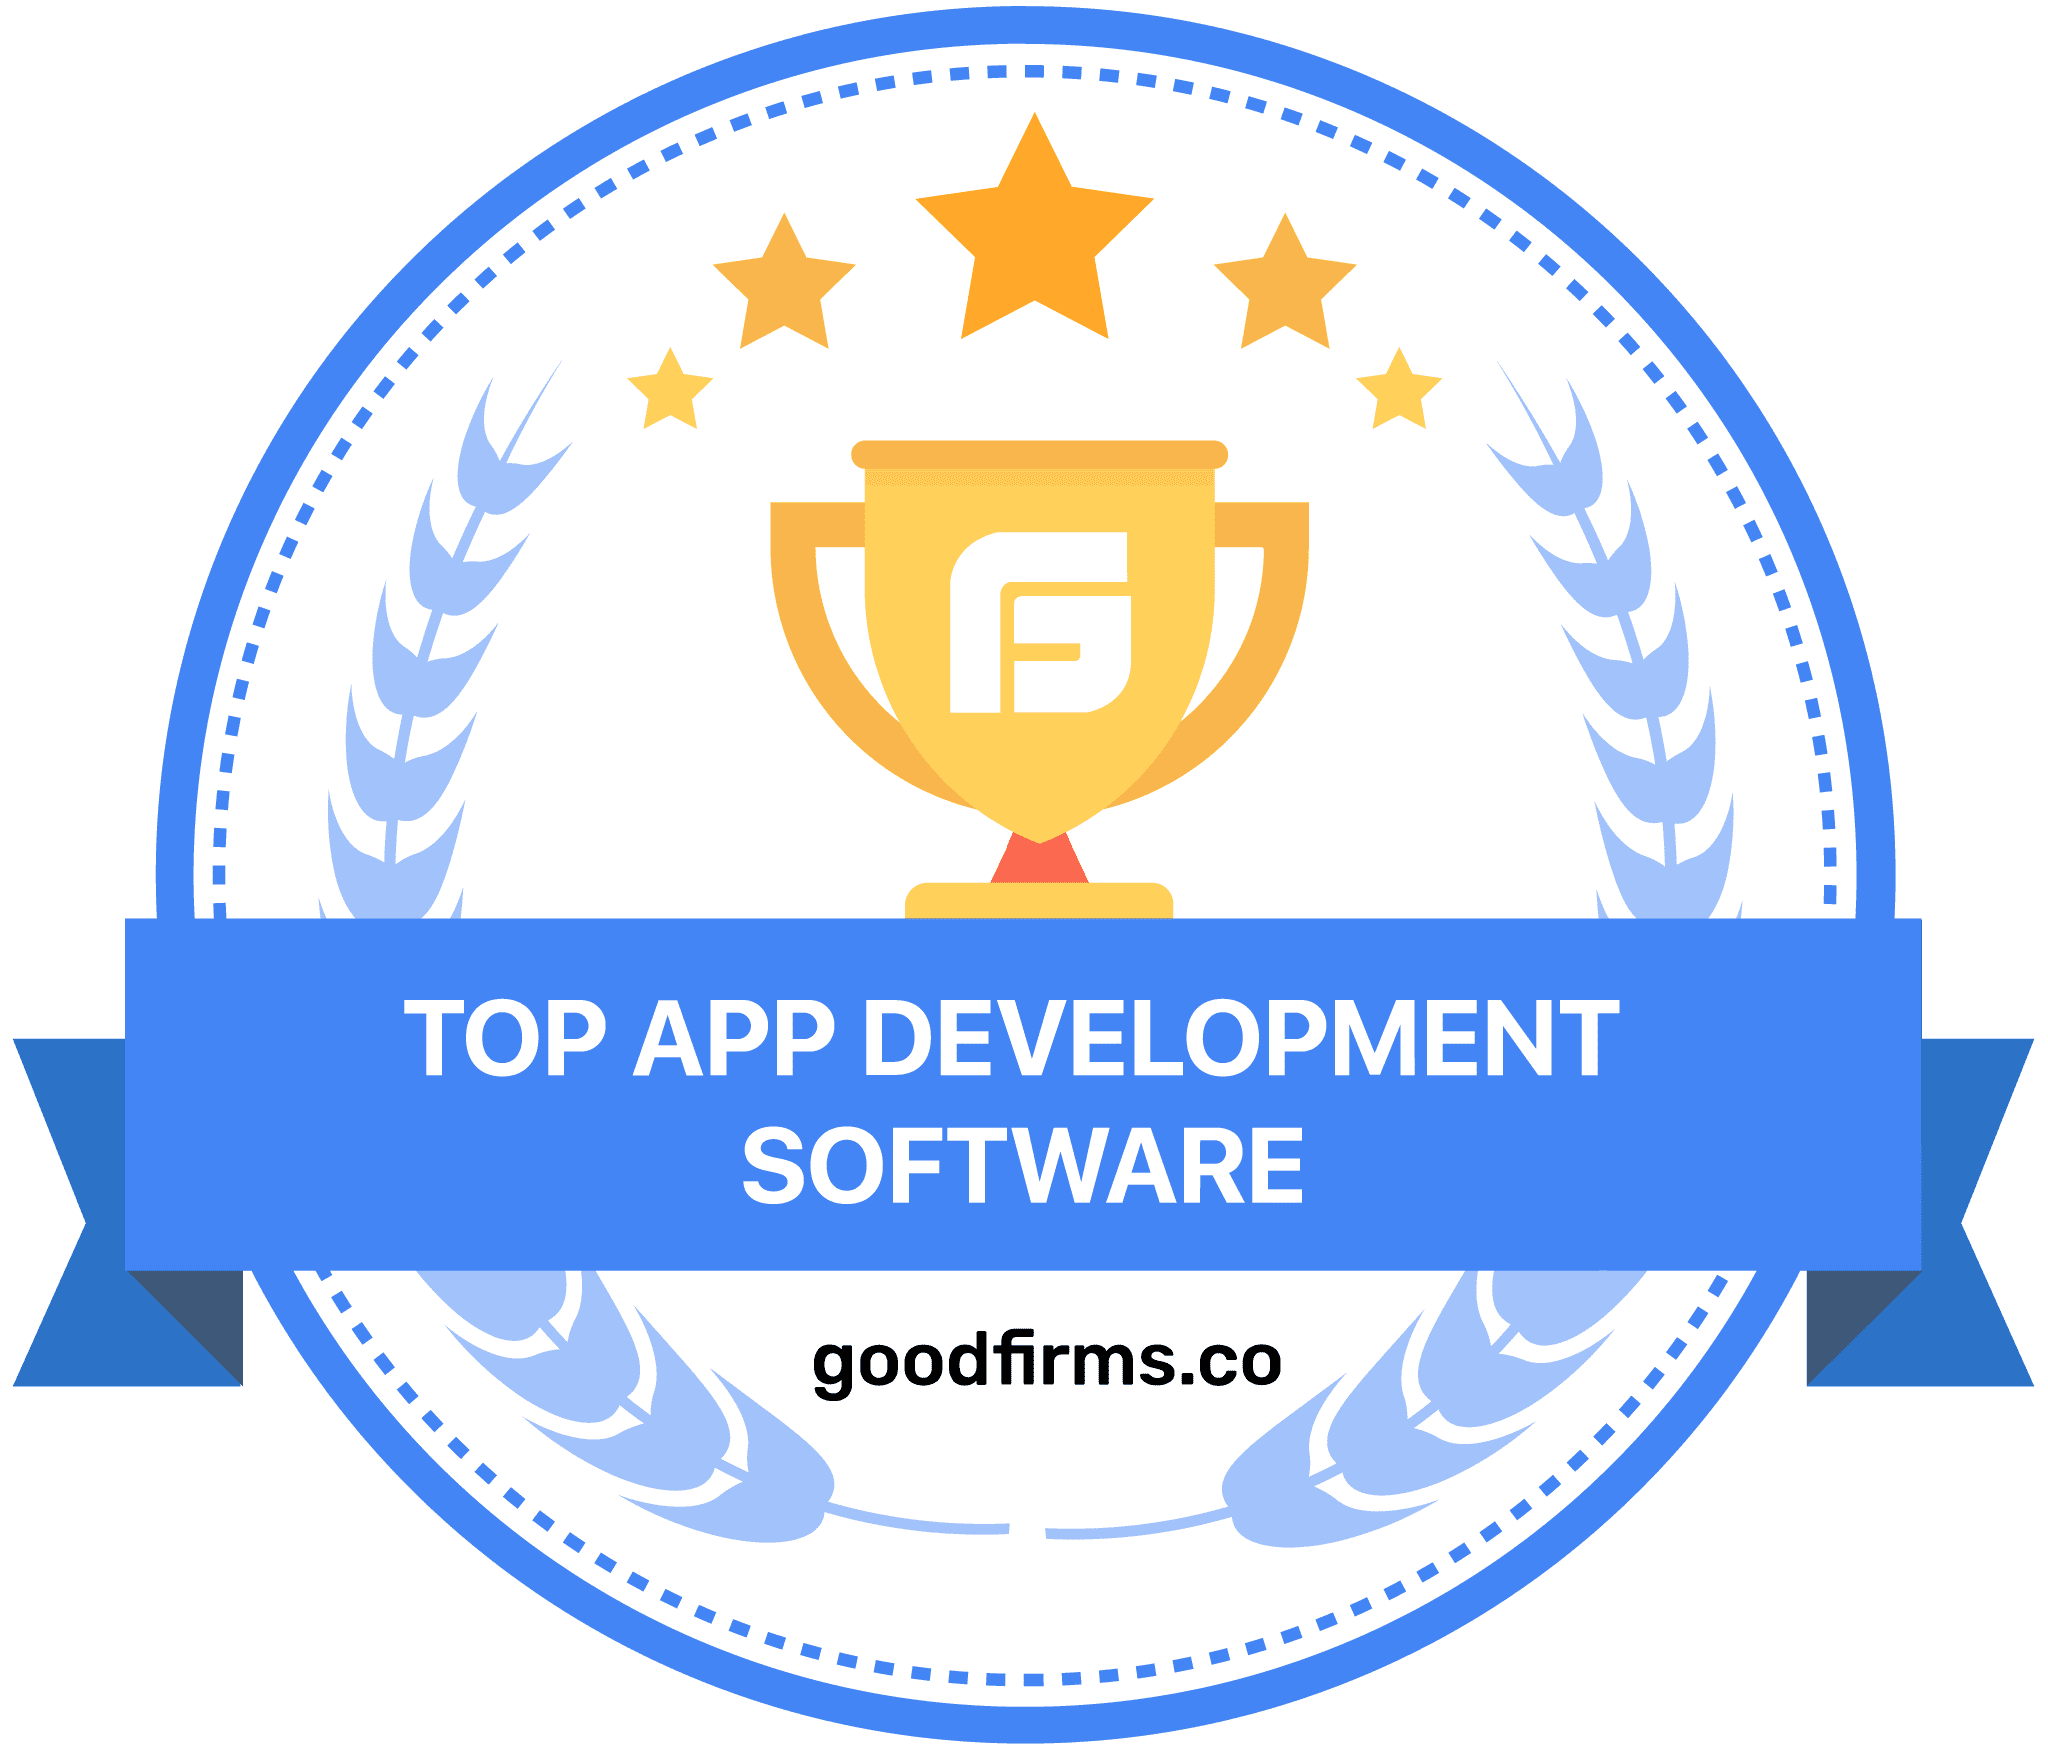 goodfirms app development